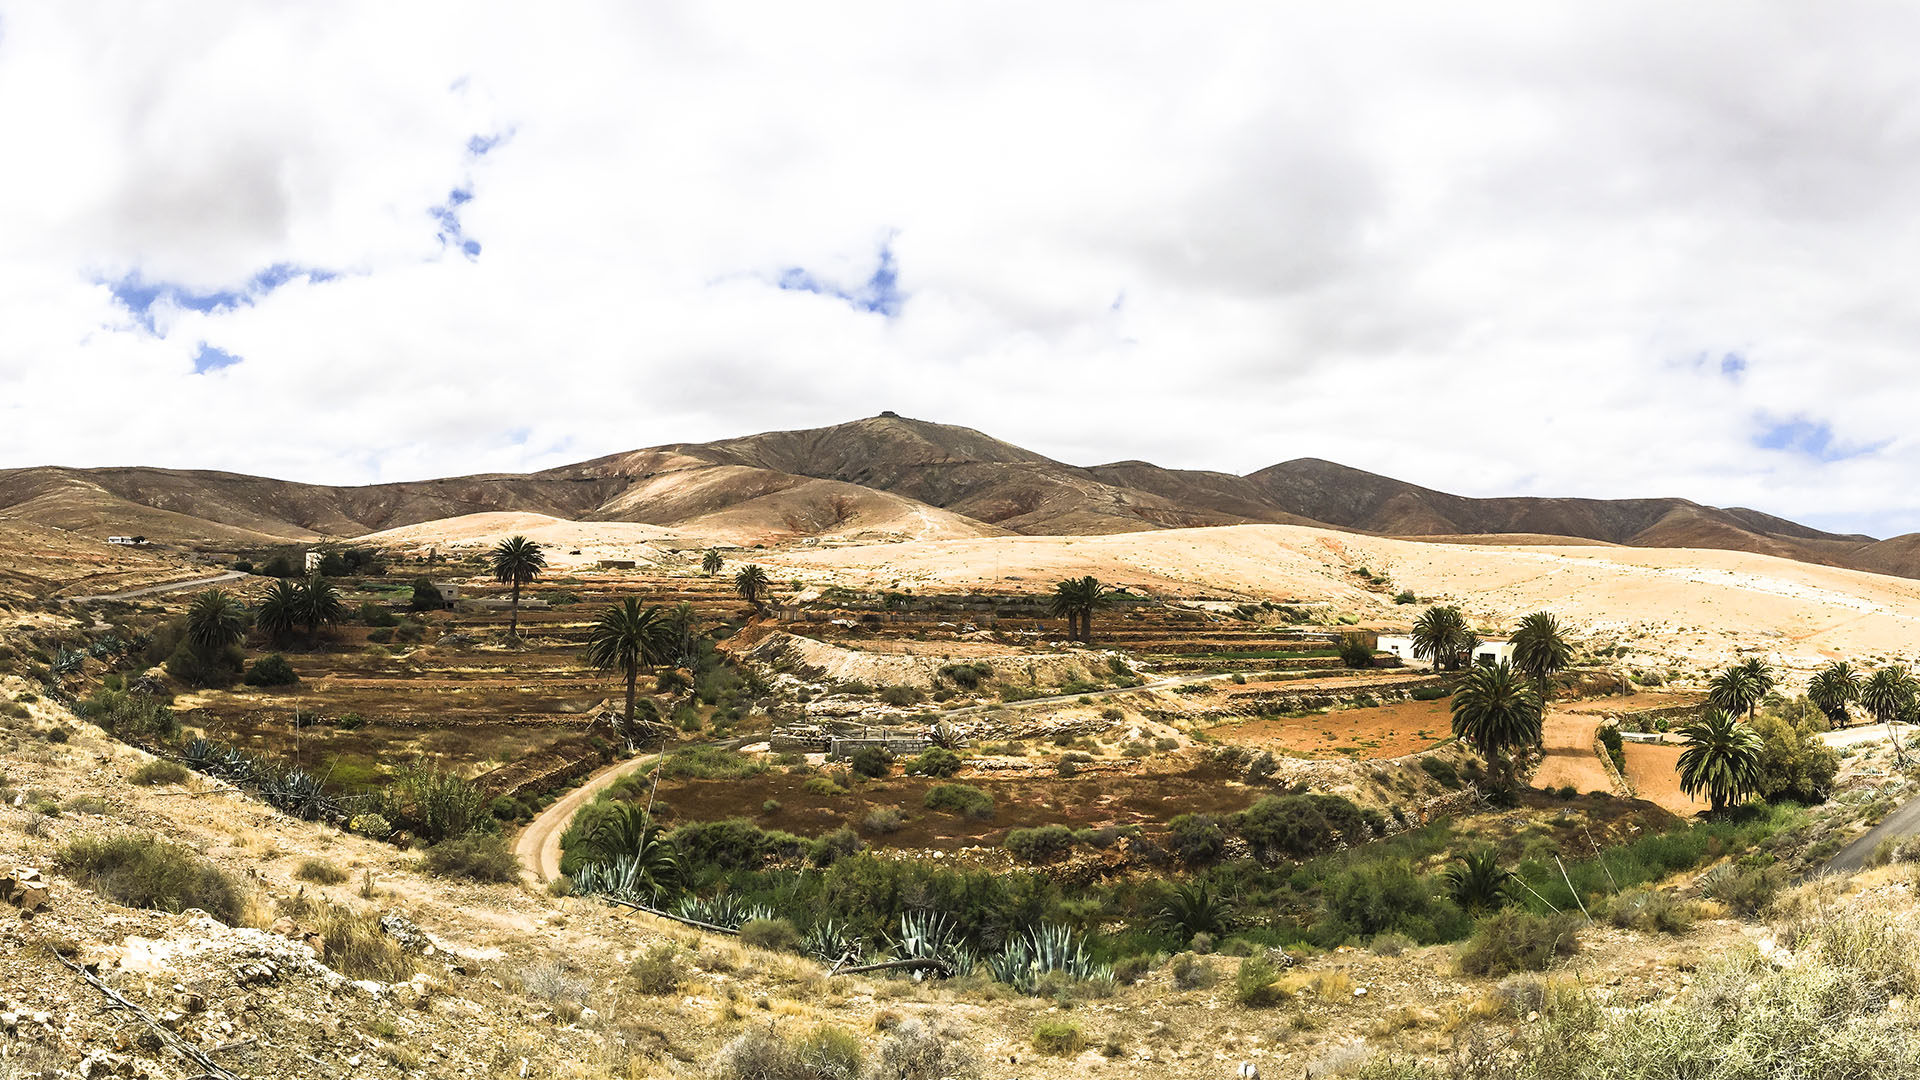 Der Ort Valle de Santa Inés Fuerteventura.